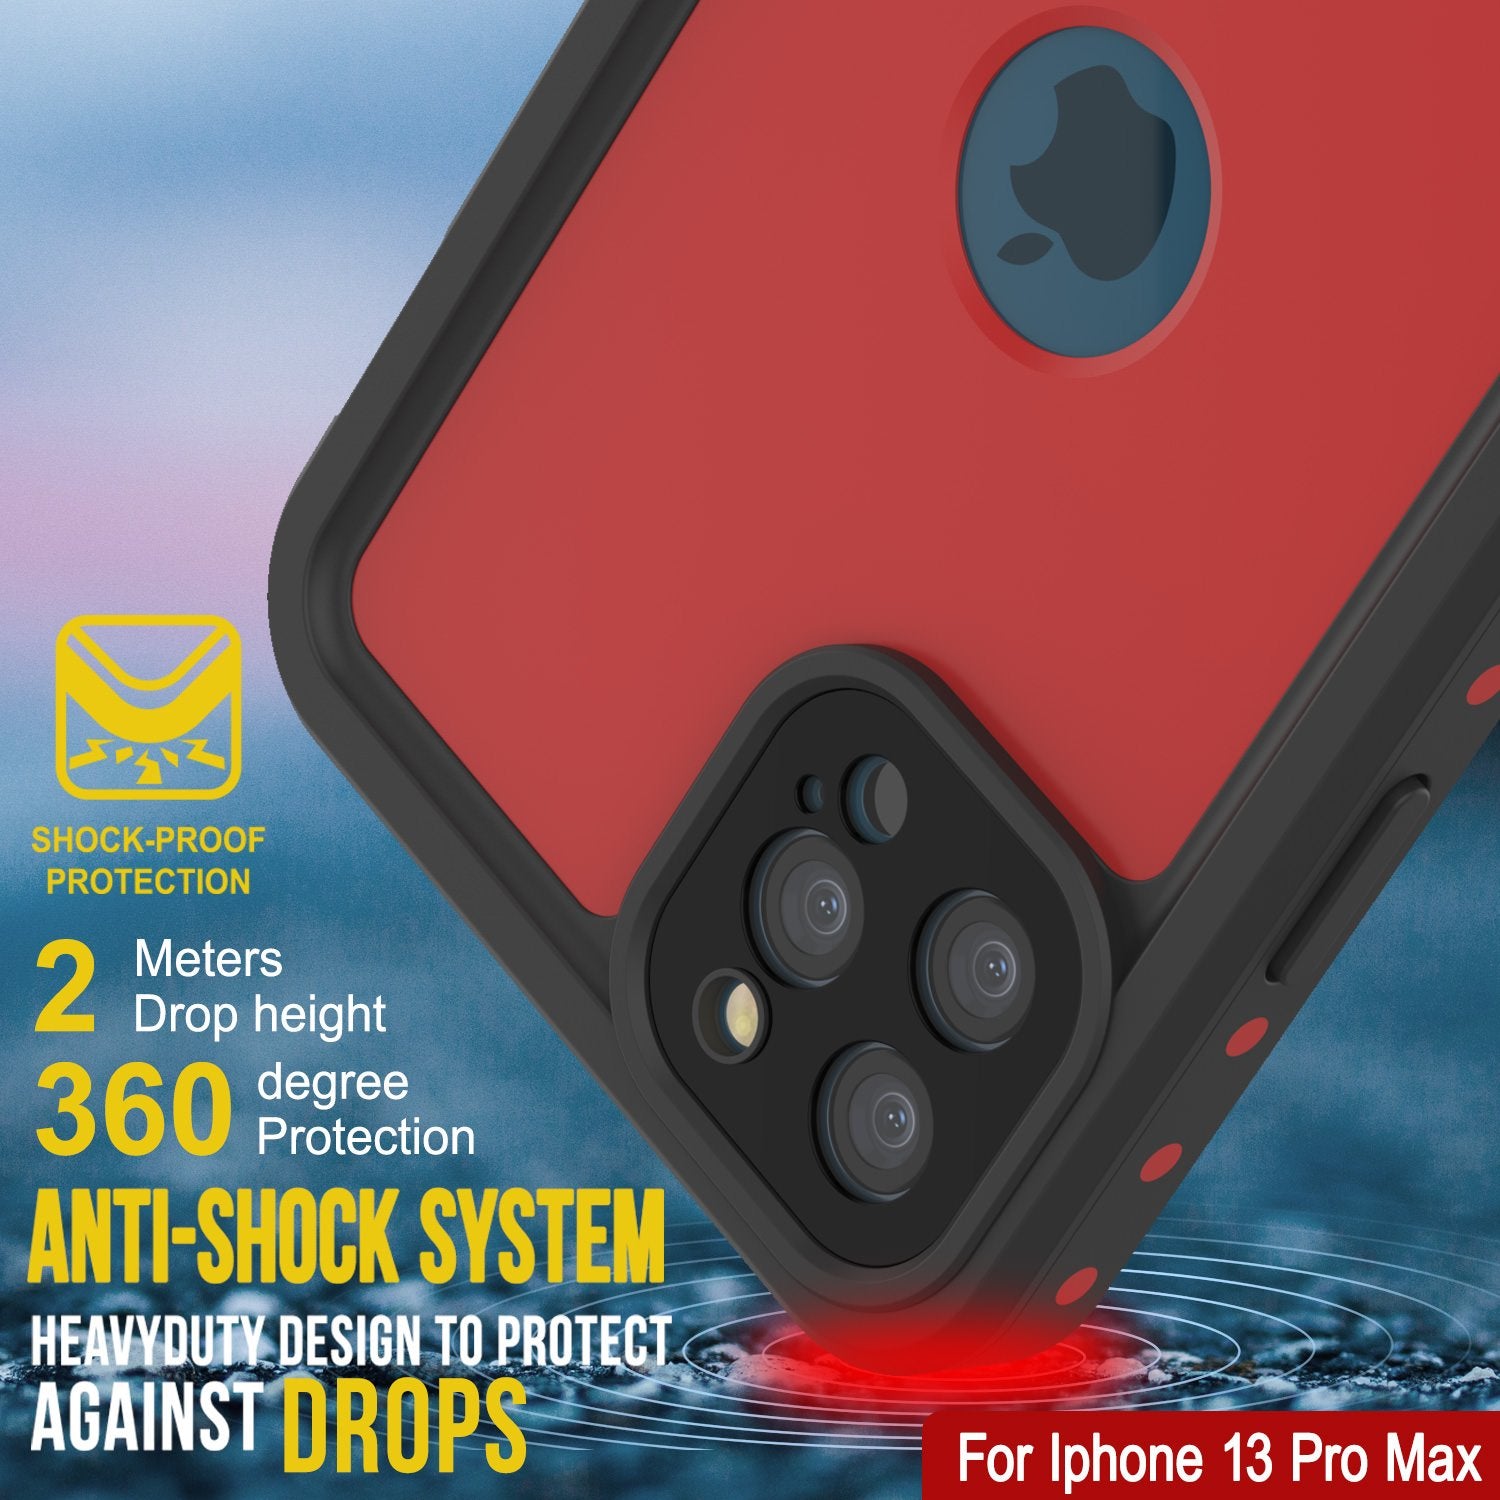 iPhone 13 Pro Max Waterproof IP68 Case, Punkcase [Red] [StudStar Series] [Slim Fit]